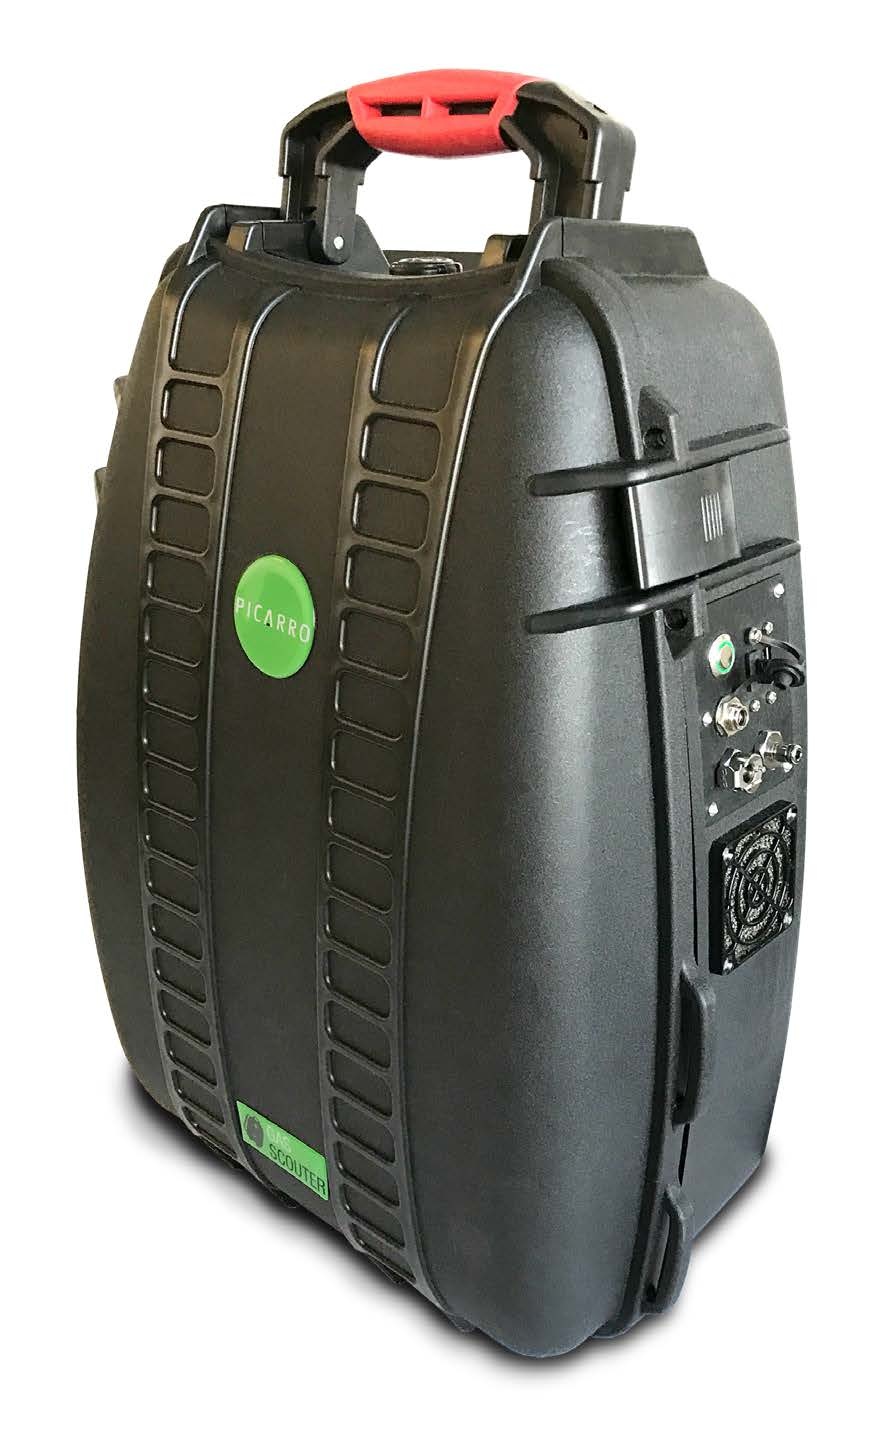 Picarro G4301 GasScouter™（CO2+CH4+H2O）便携式高精度气体分析仪